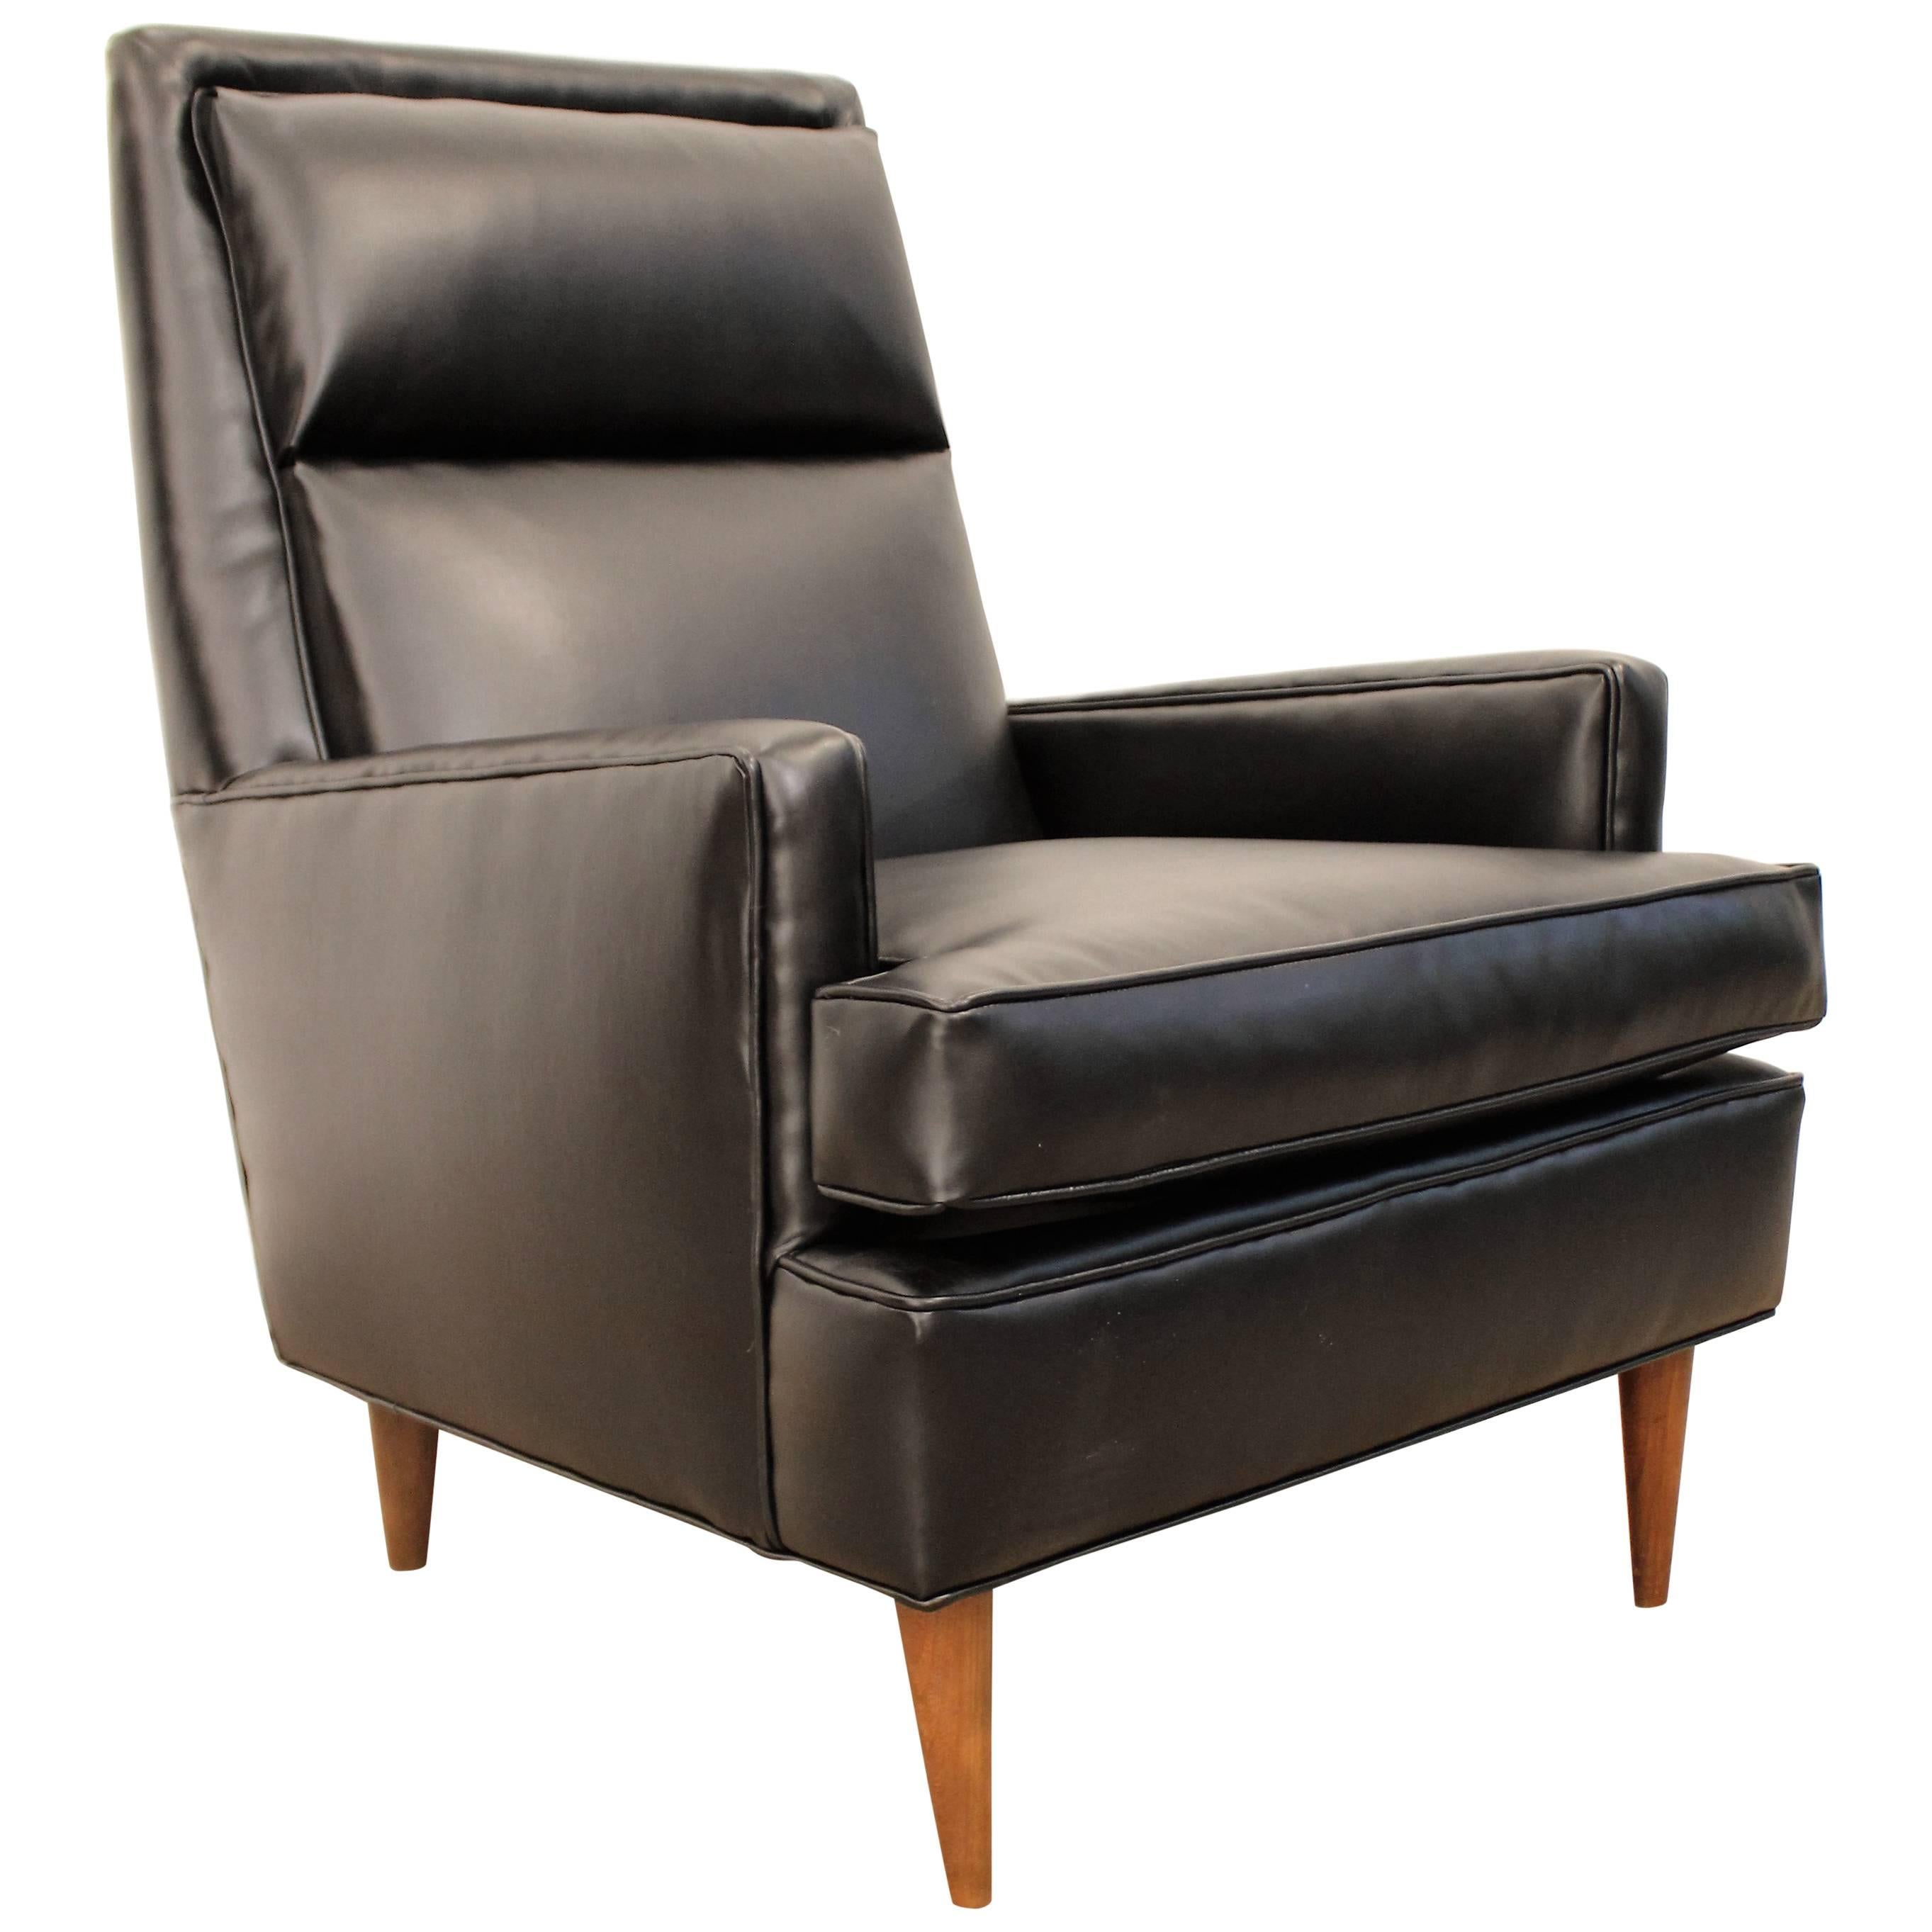 Midcentury Danish Modern Selig Leather Pencil-Leg Lounge Chair